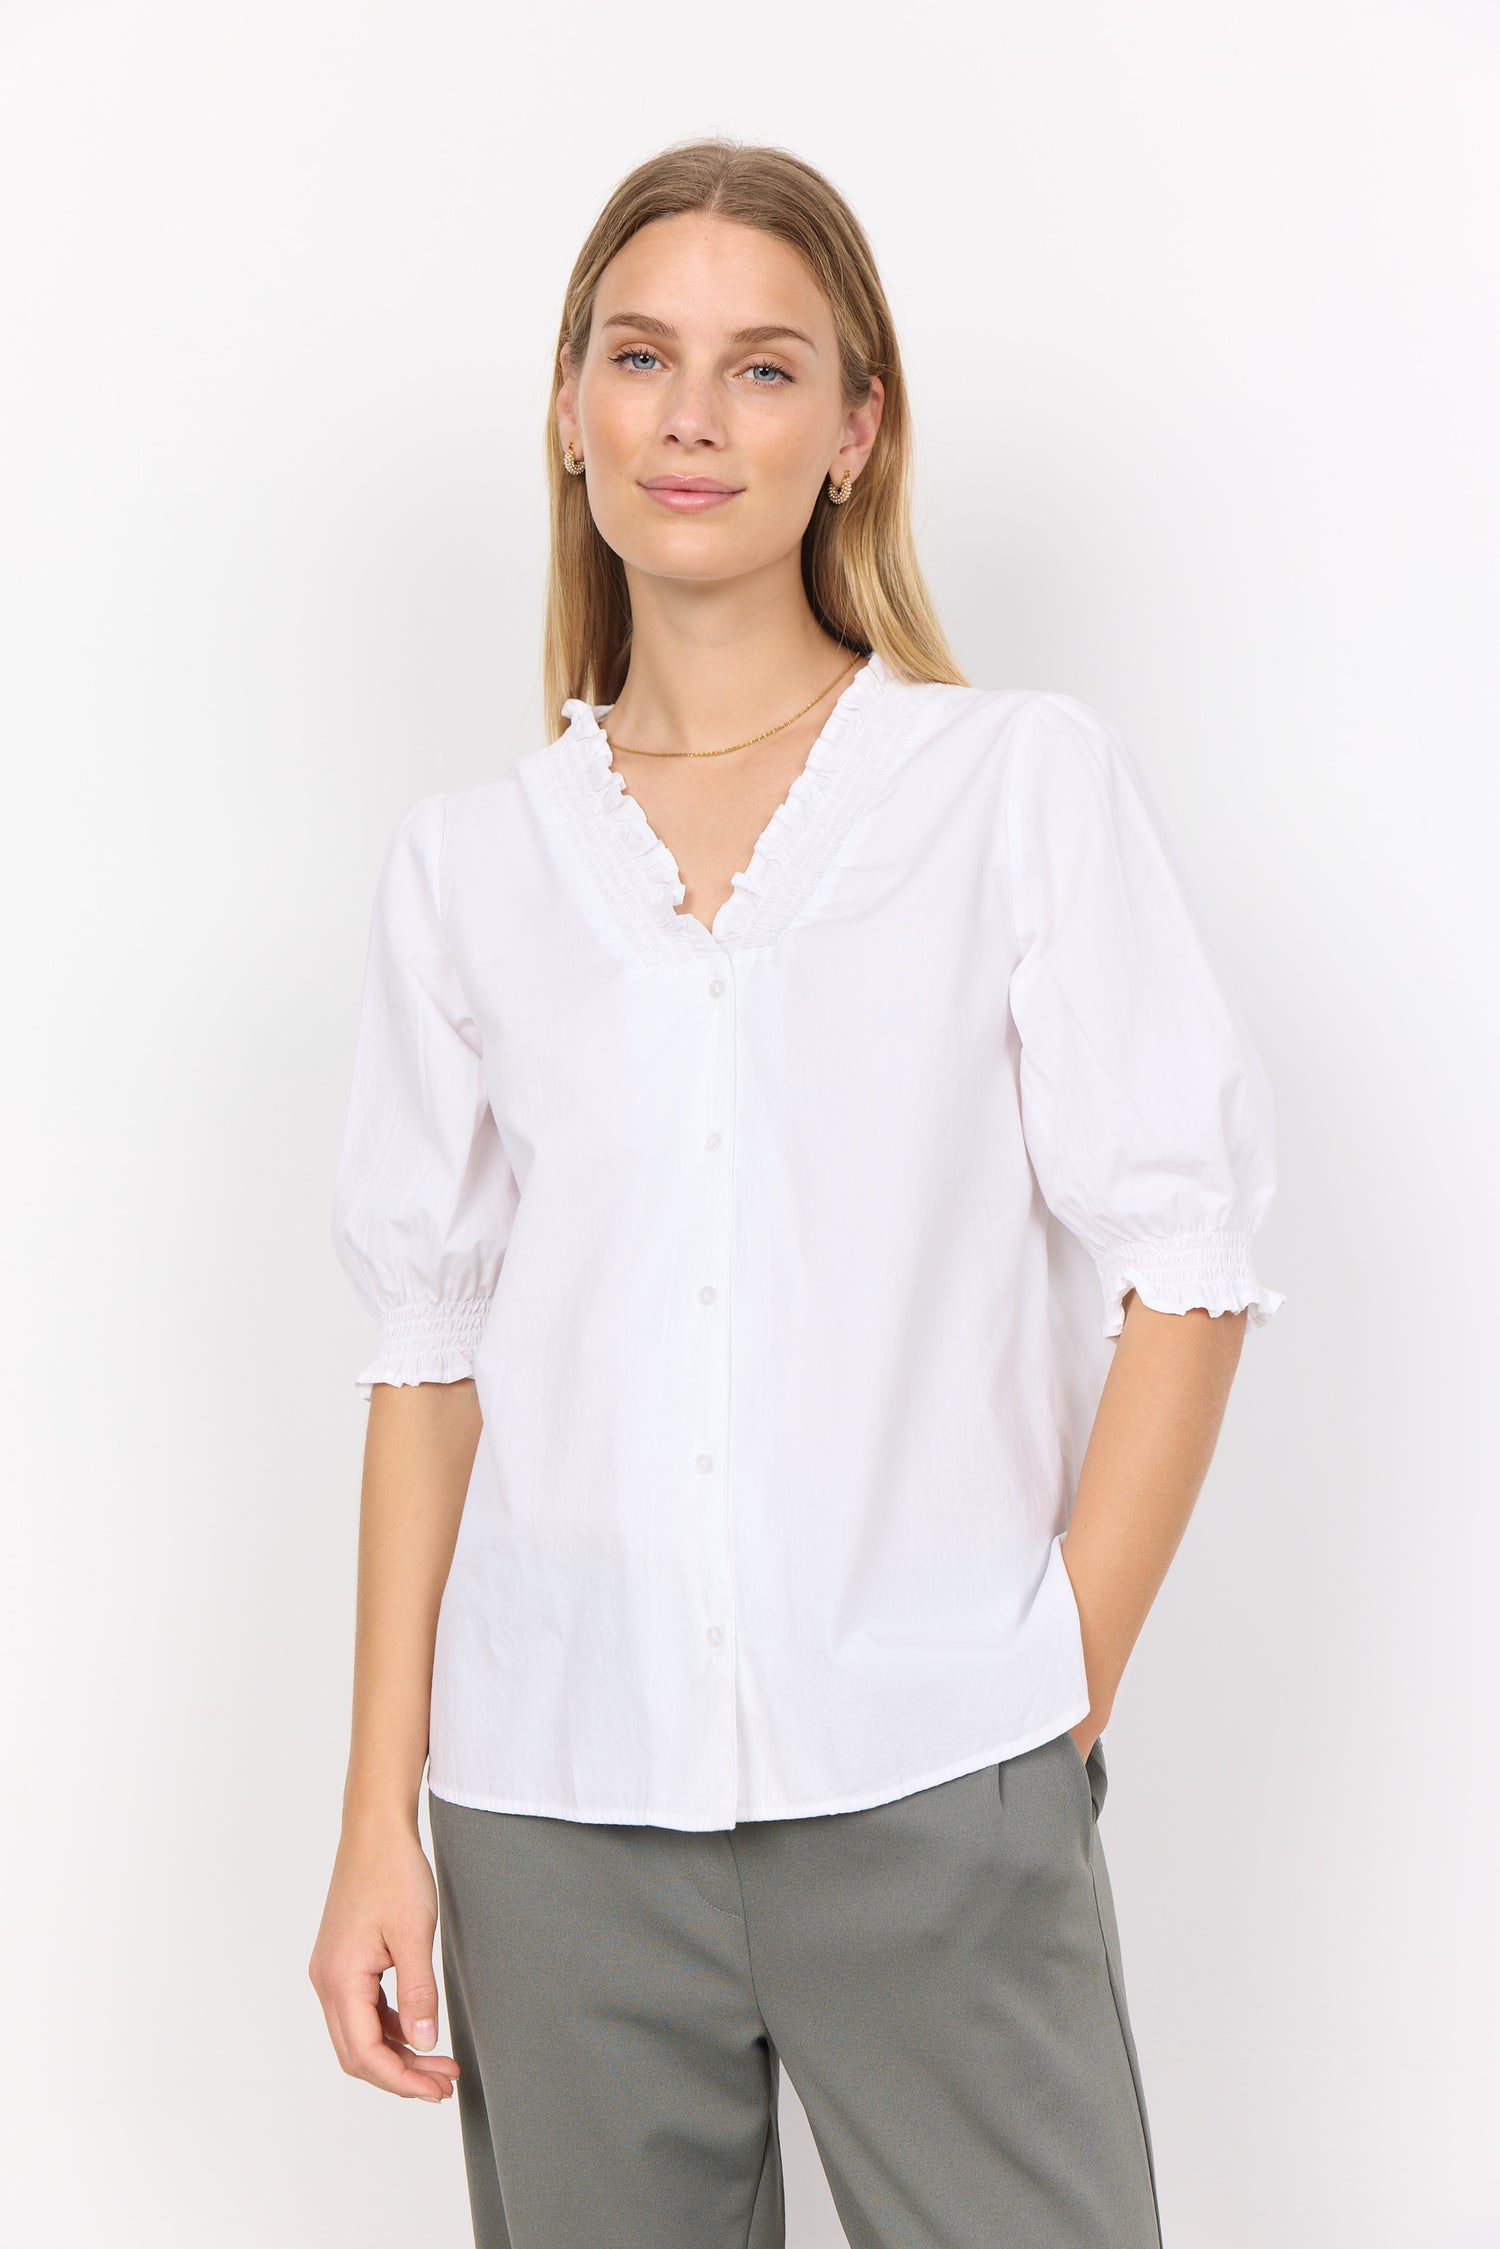 Shirt - SC-MILLY 7 - White